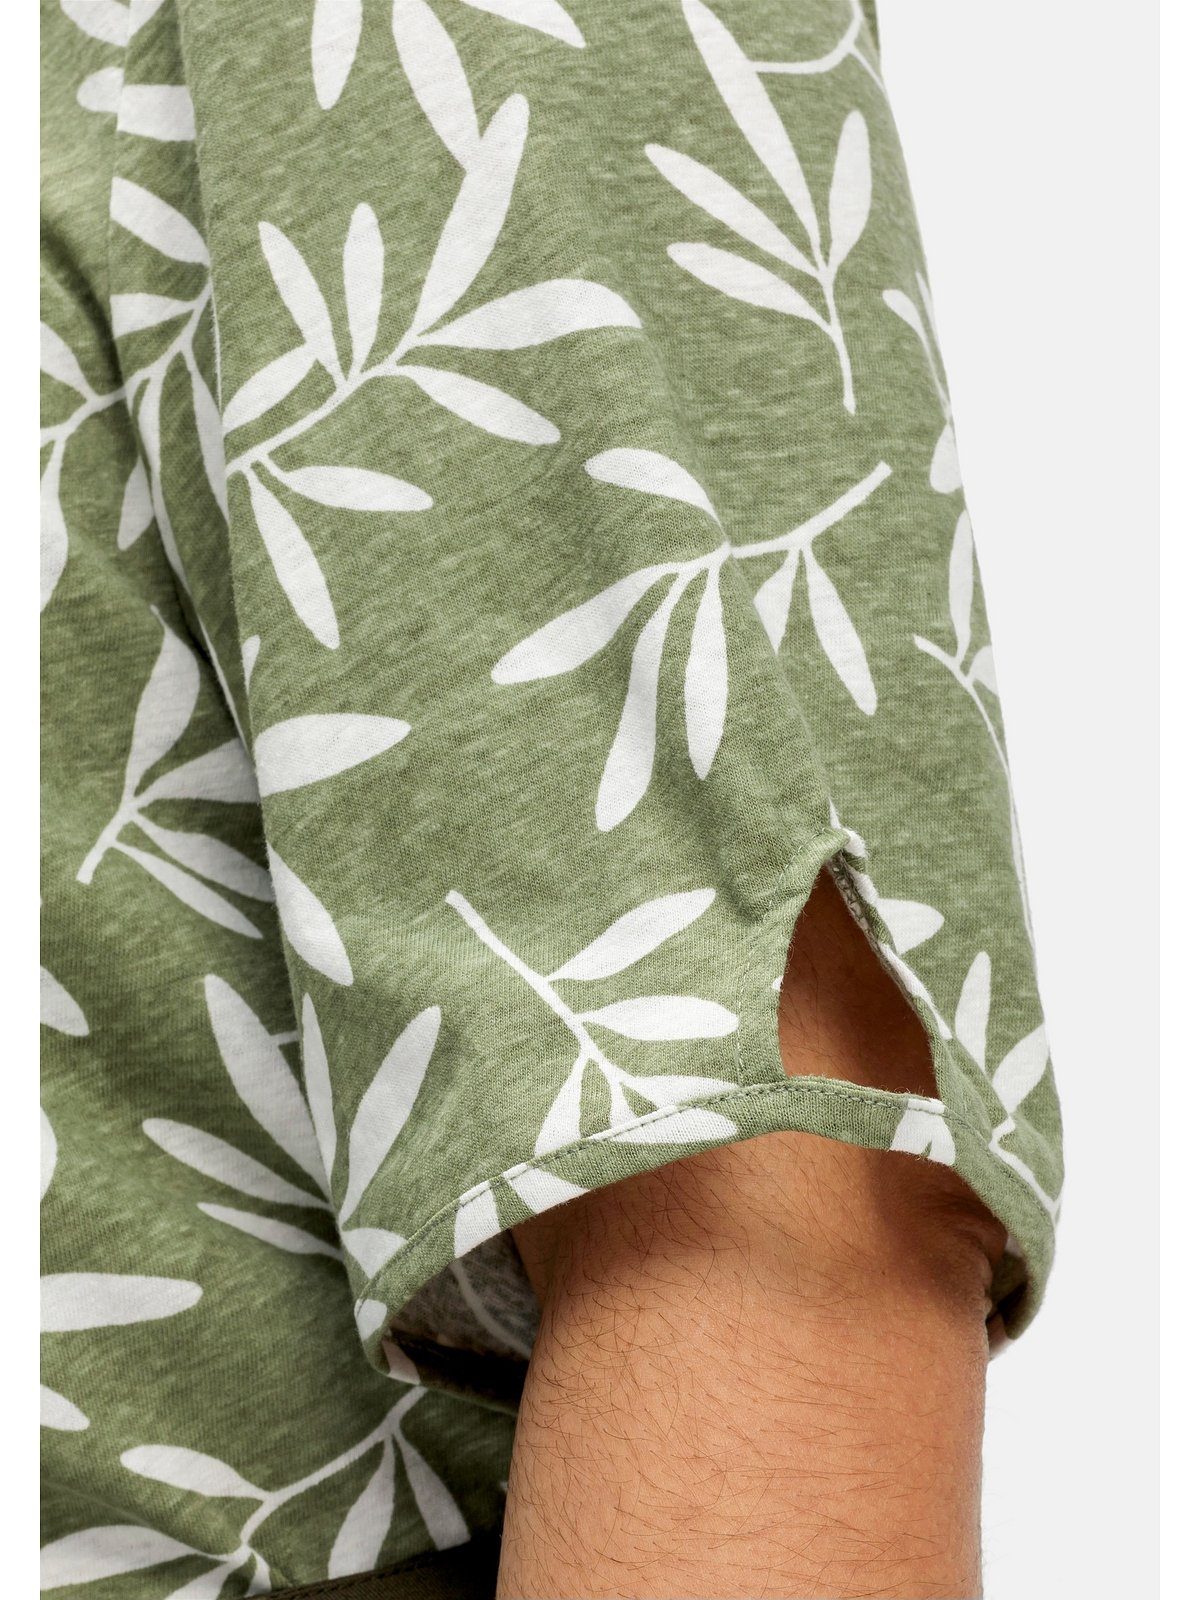 Sheego mit Leinen-Mix Große Größen gemustert Blätterprint, khaki T-Shirt im